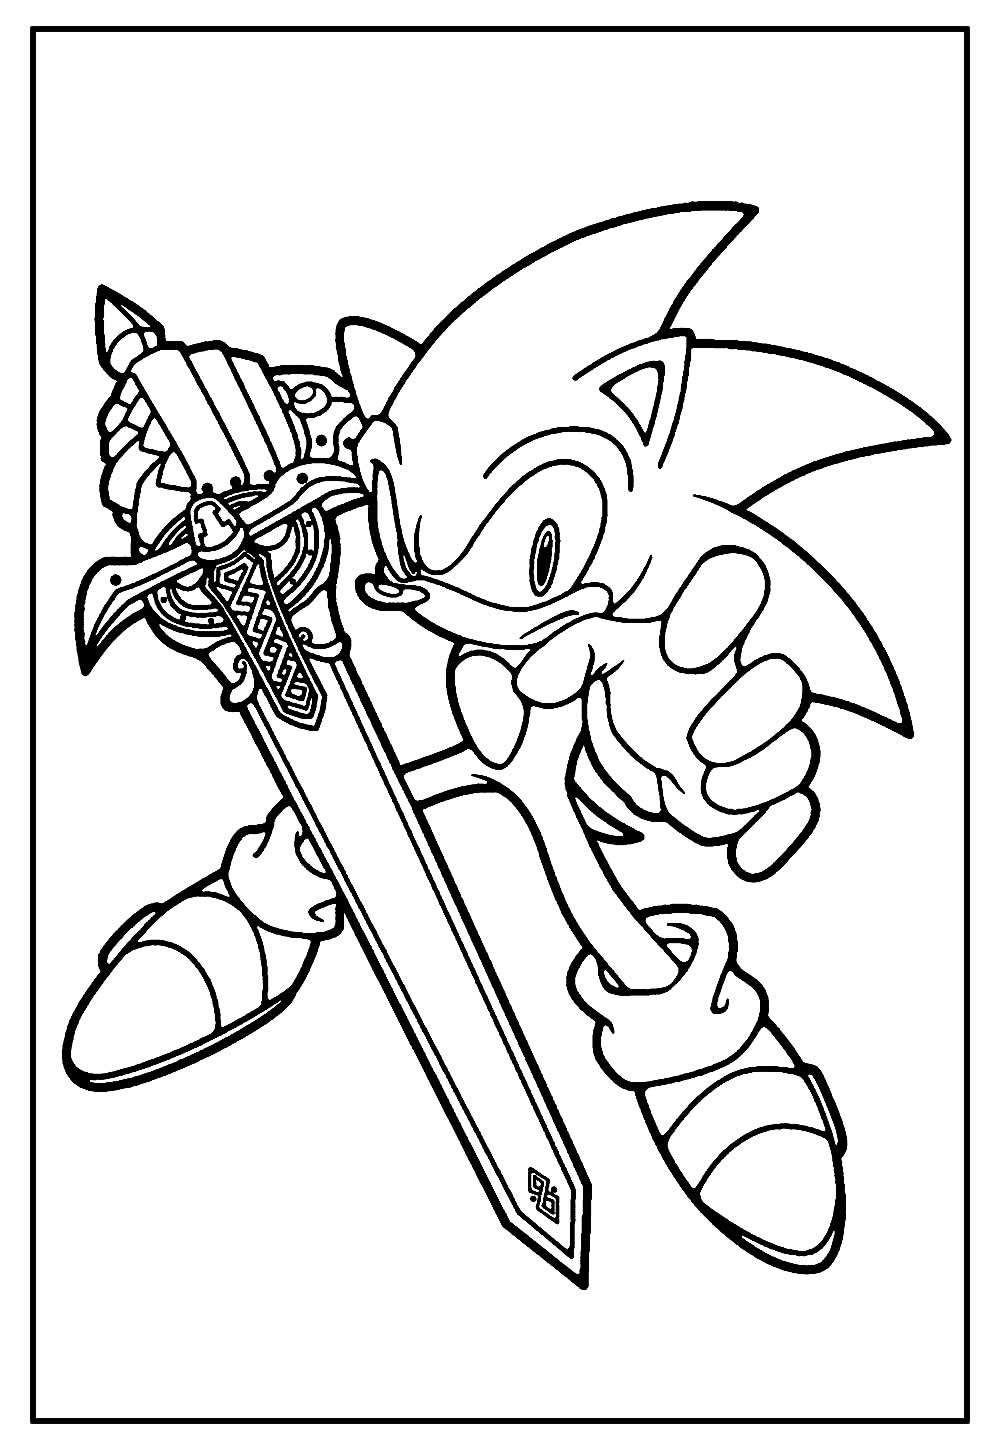 Colorir desenho do Sonic